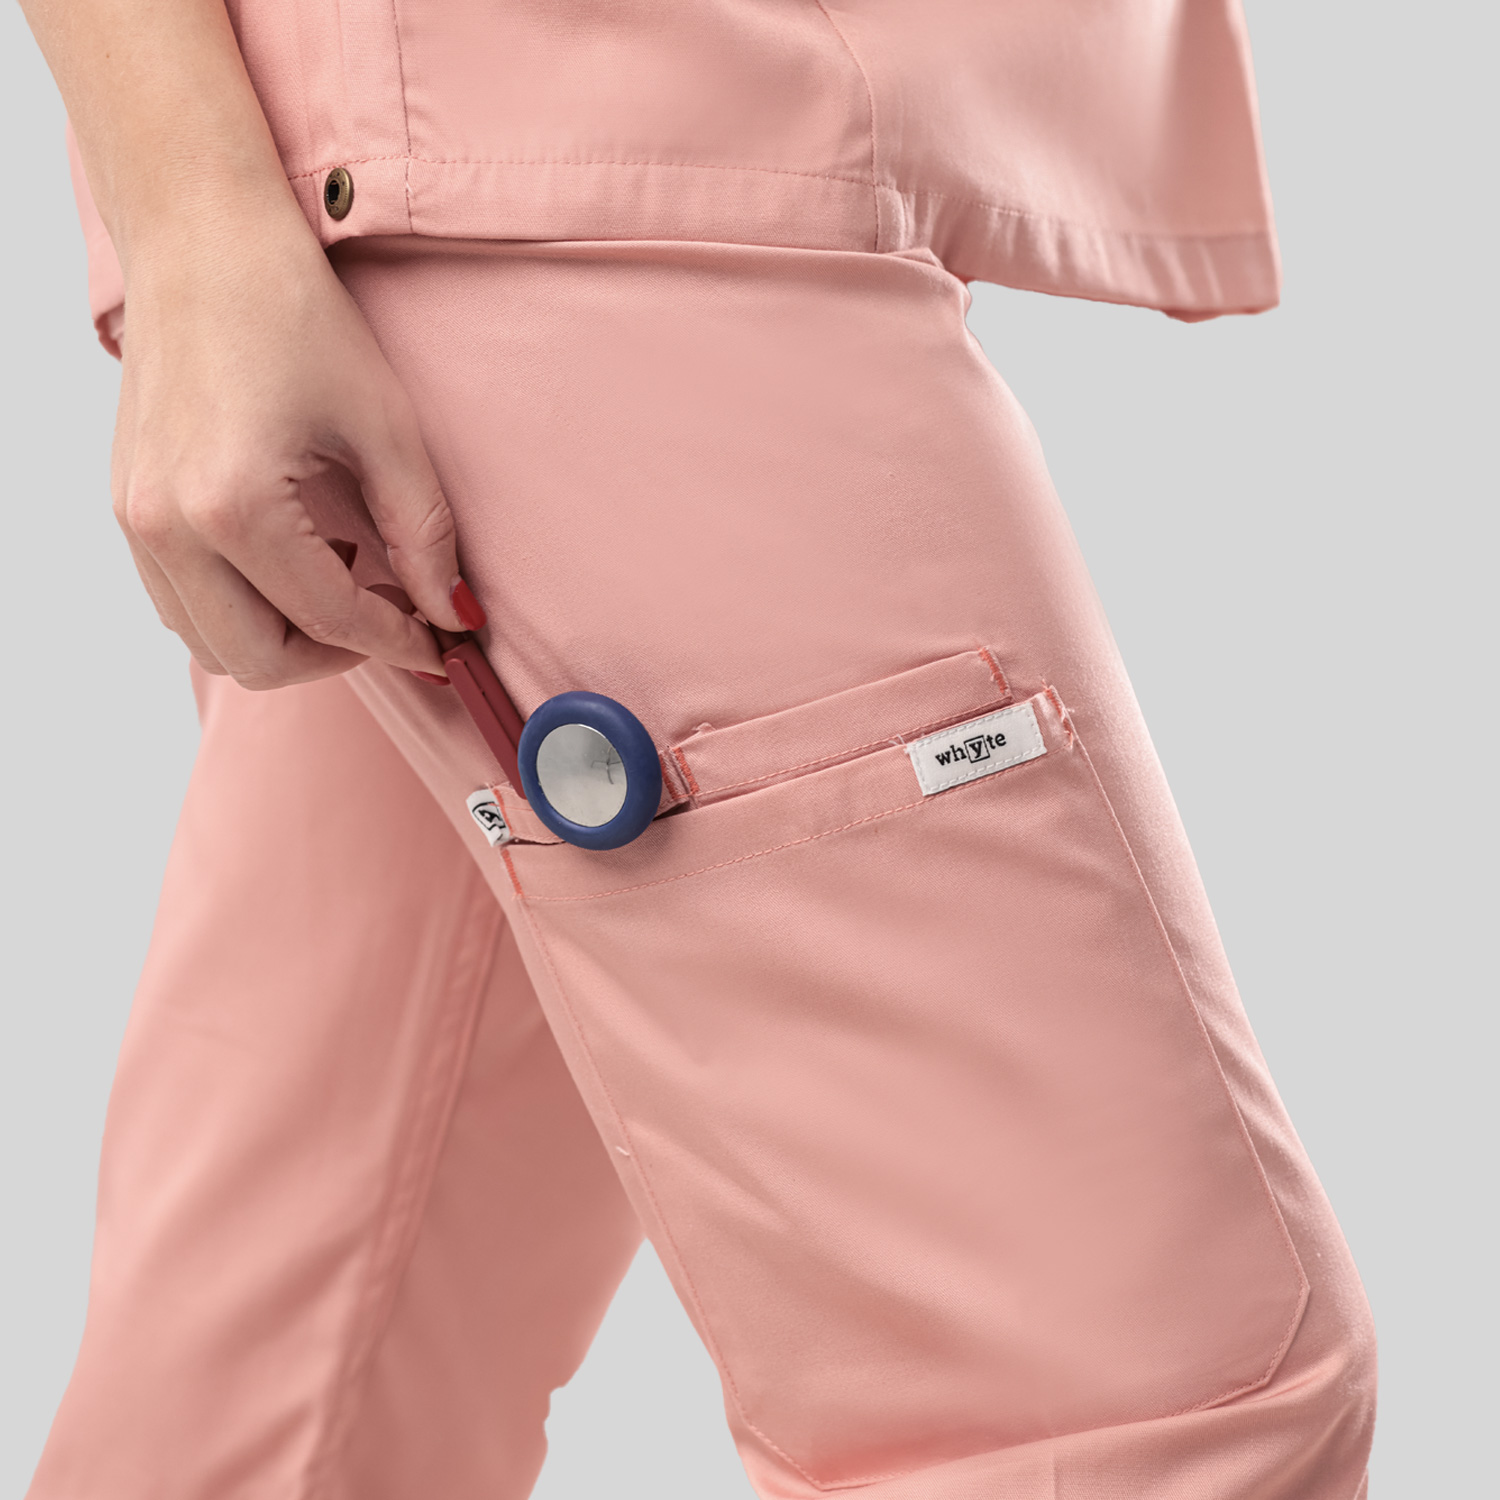 classic edition -2.0- pink blush- pant- 3 pockets